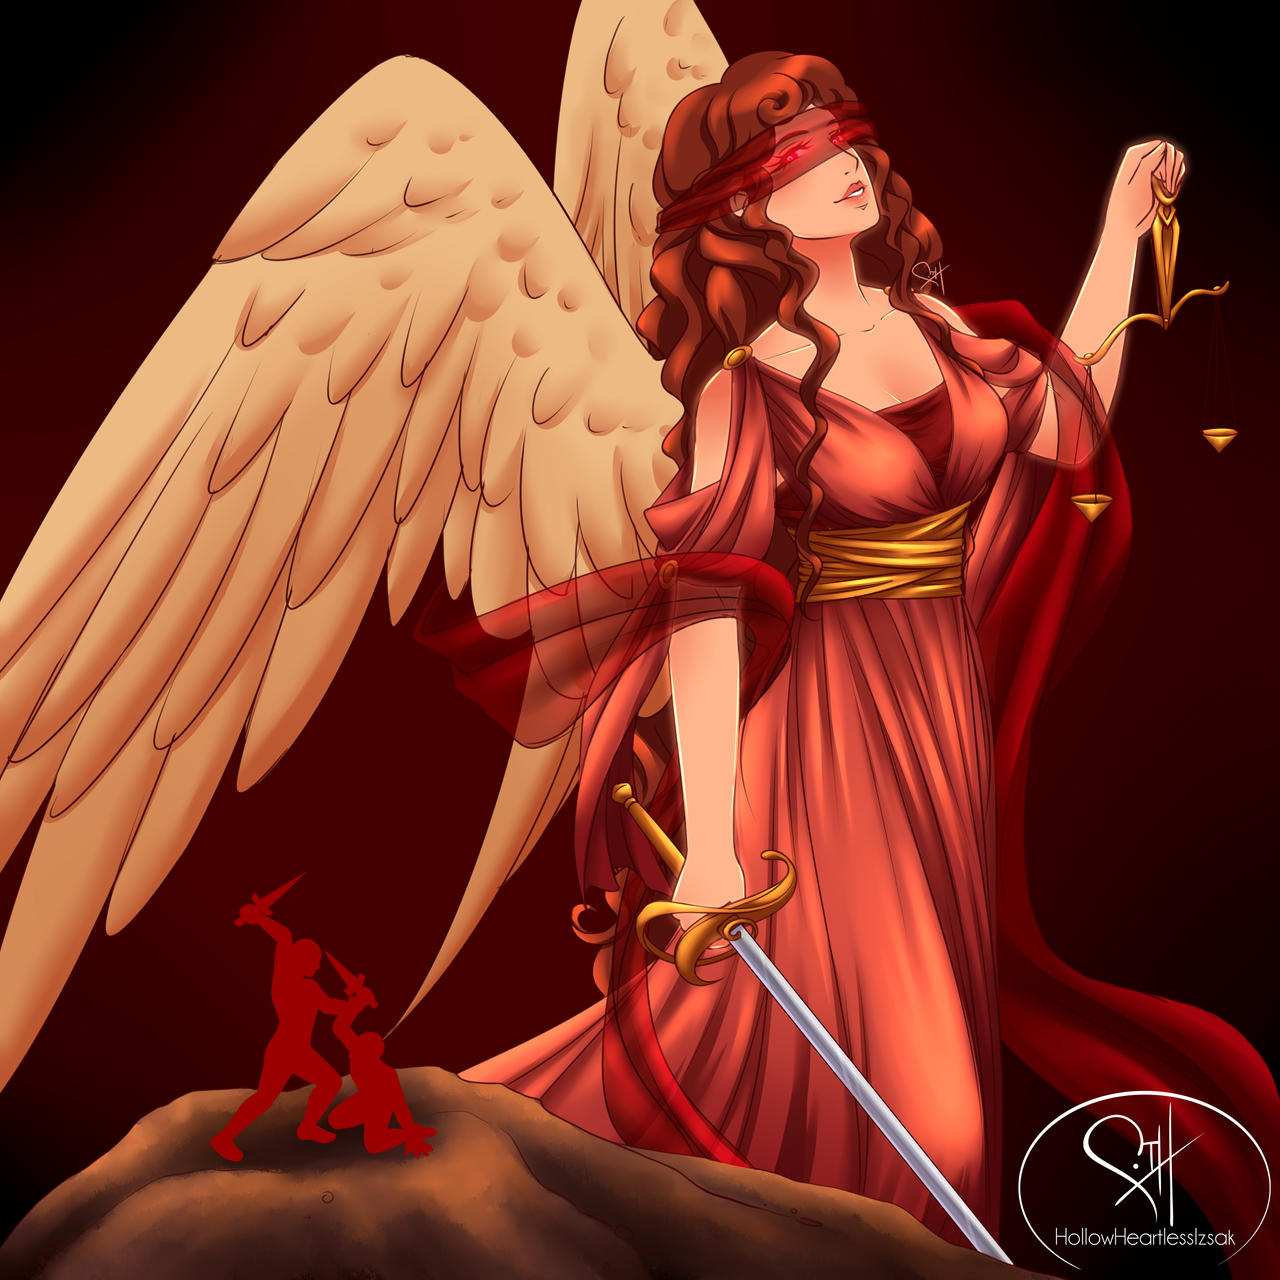 24 Greek Goddess - Nemesis by hollowheartlessIzsak on DeviantArt